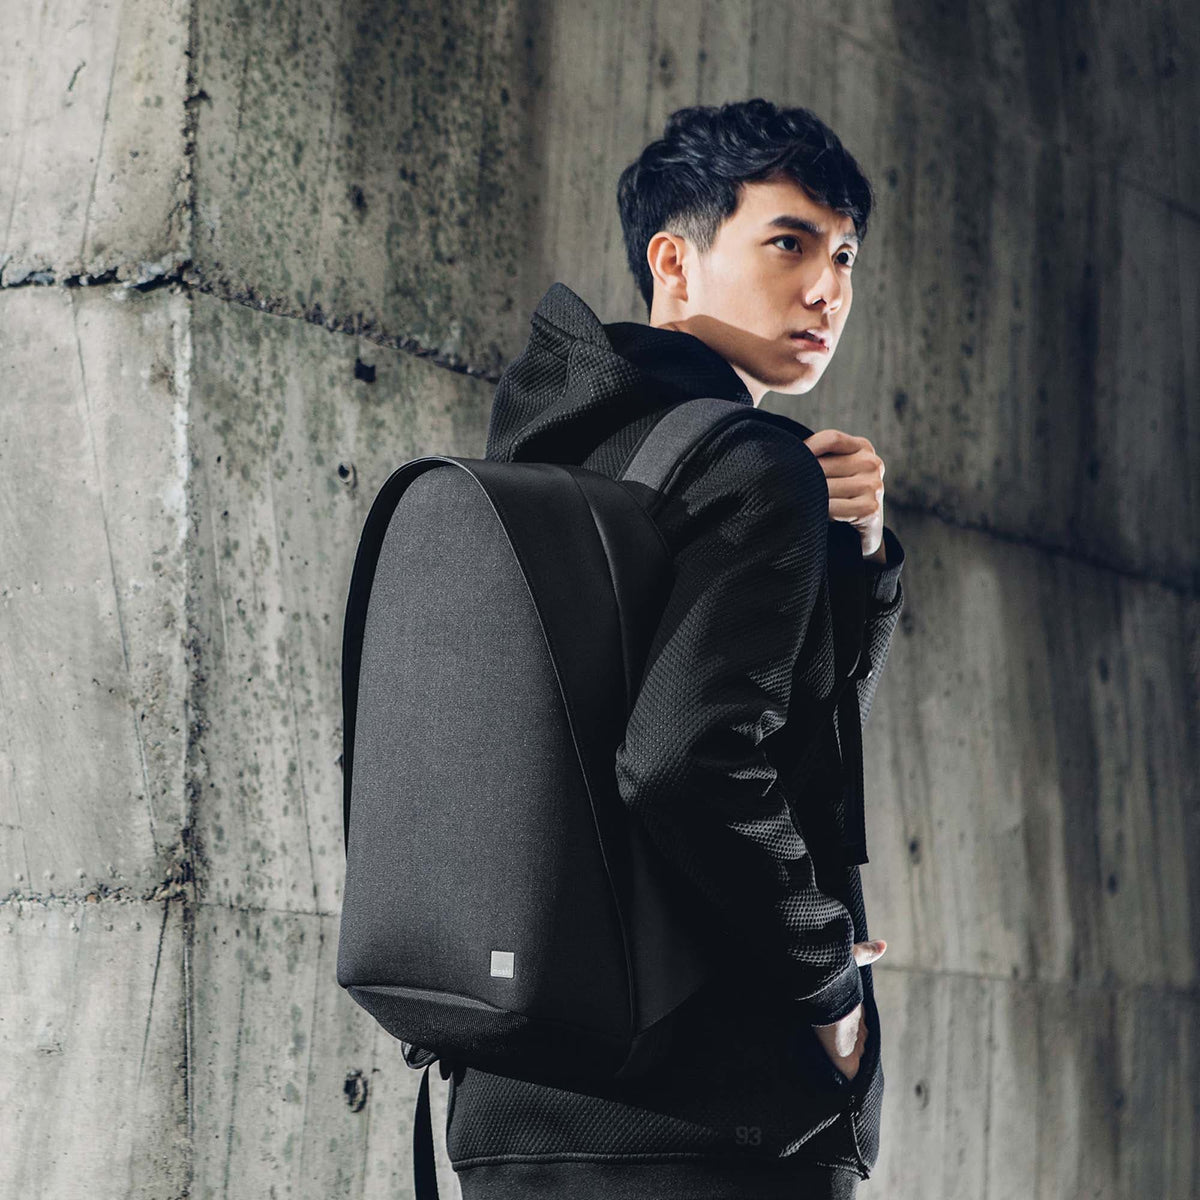 Moshi Tego Smart Urban Backpack